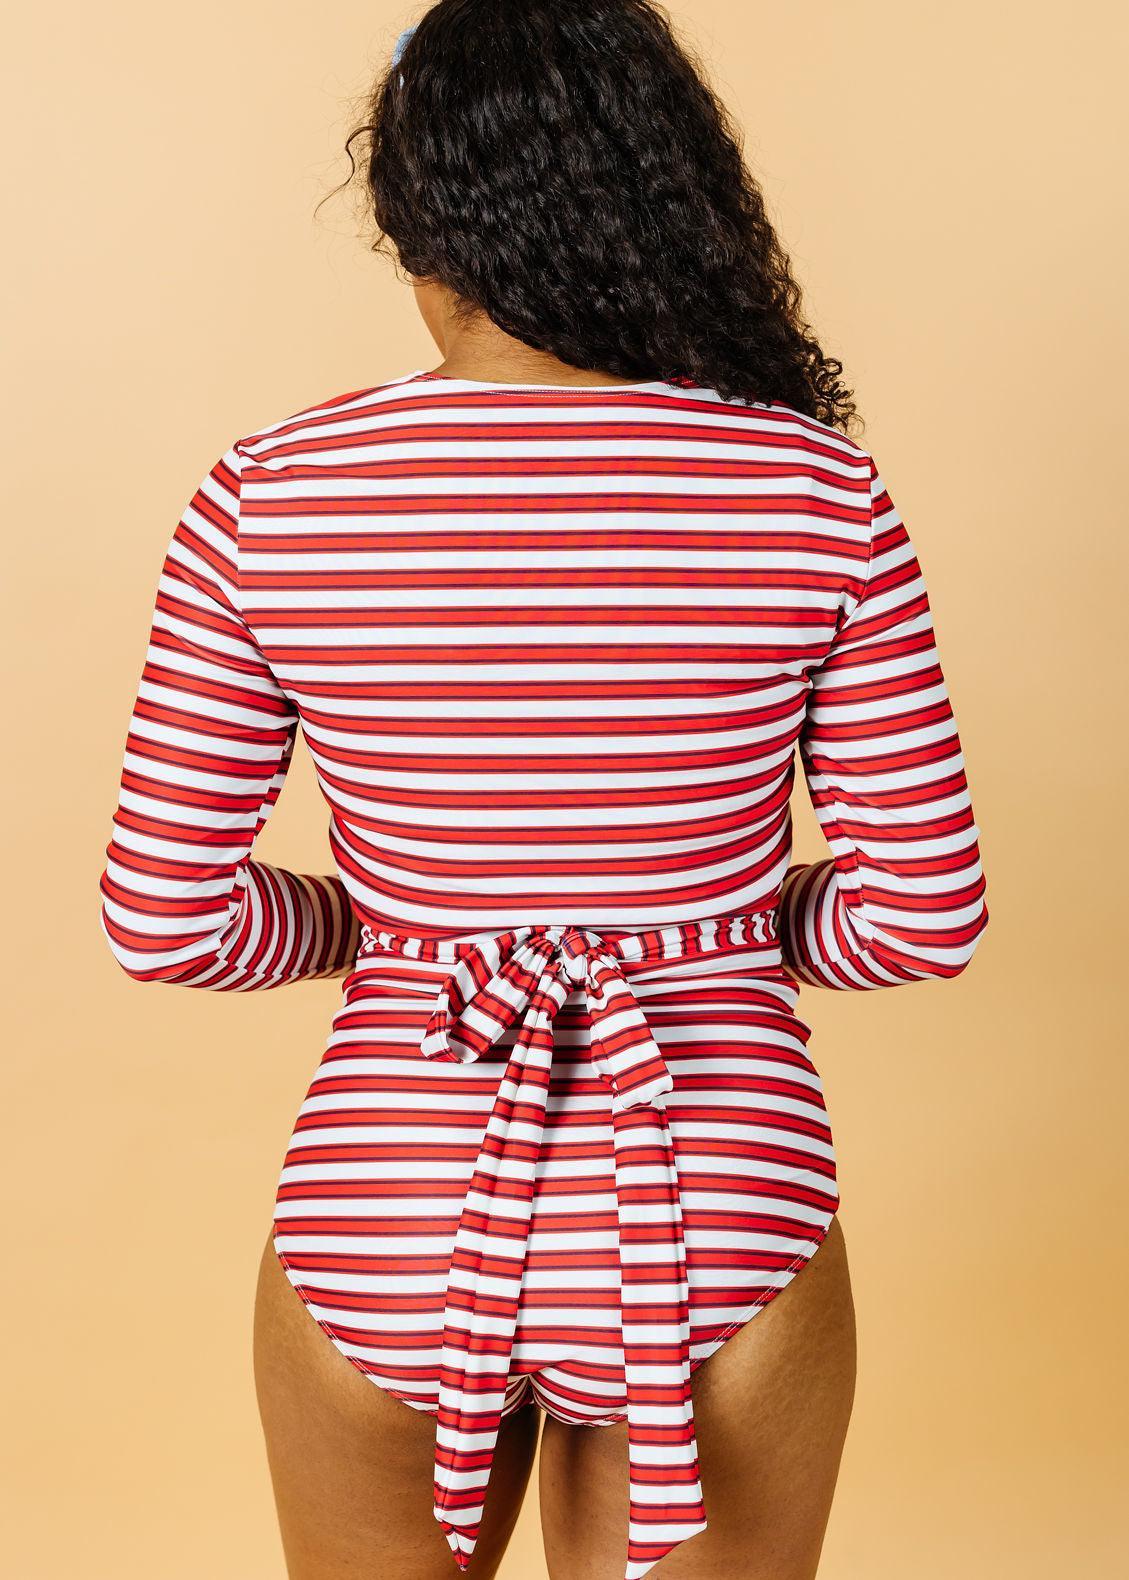 Womens Swimsuit Rashguard Crop Top - Red + Navy Stripes